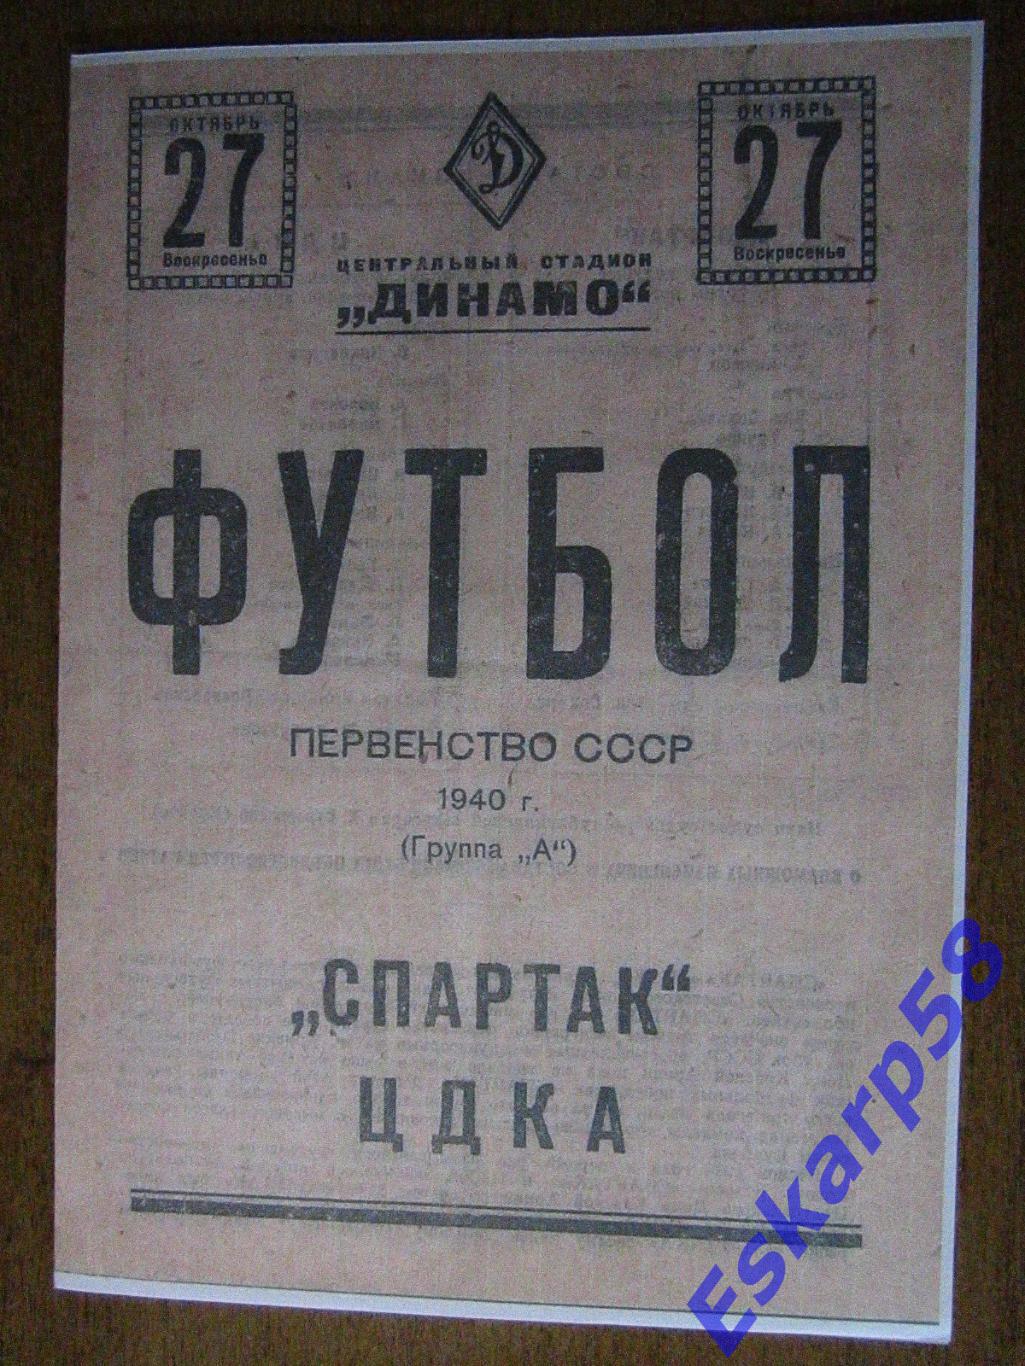 1940.ЦДКА-Спартак Москва.-27.10